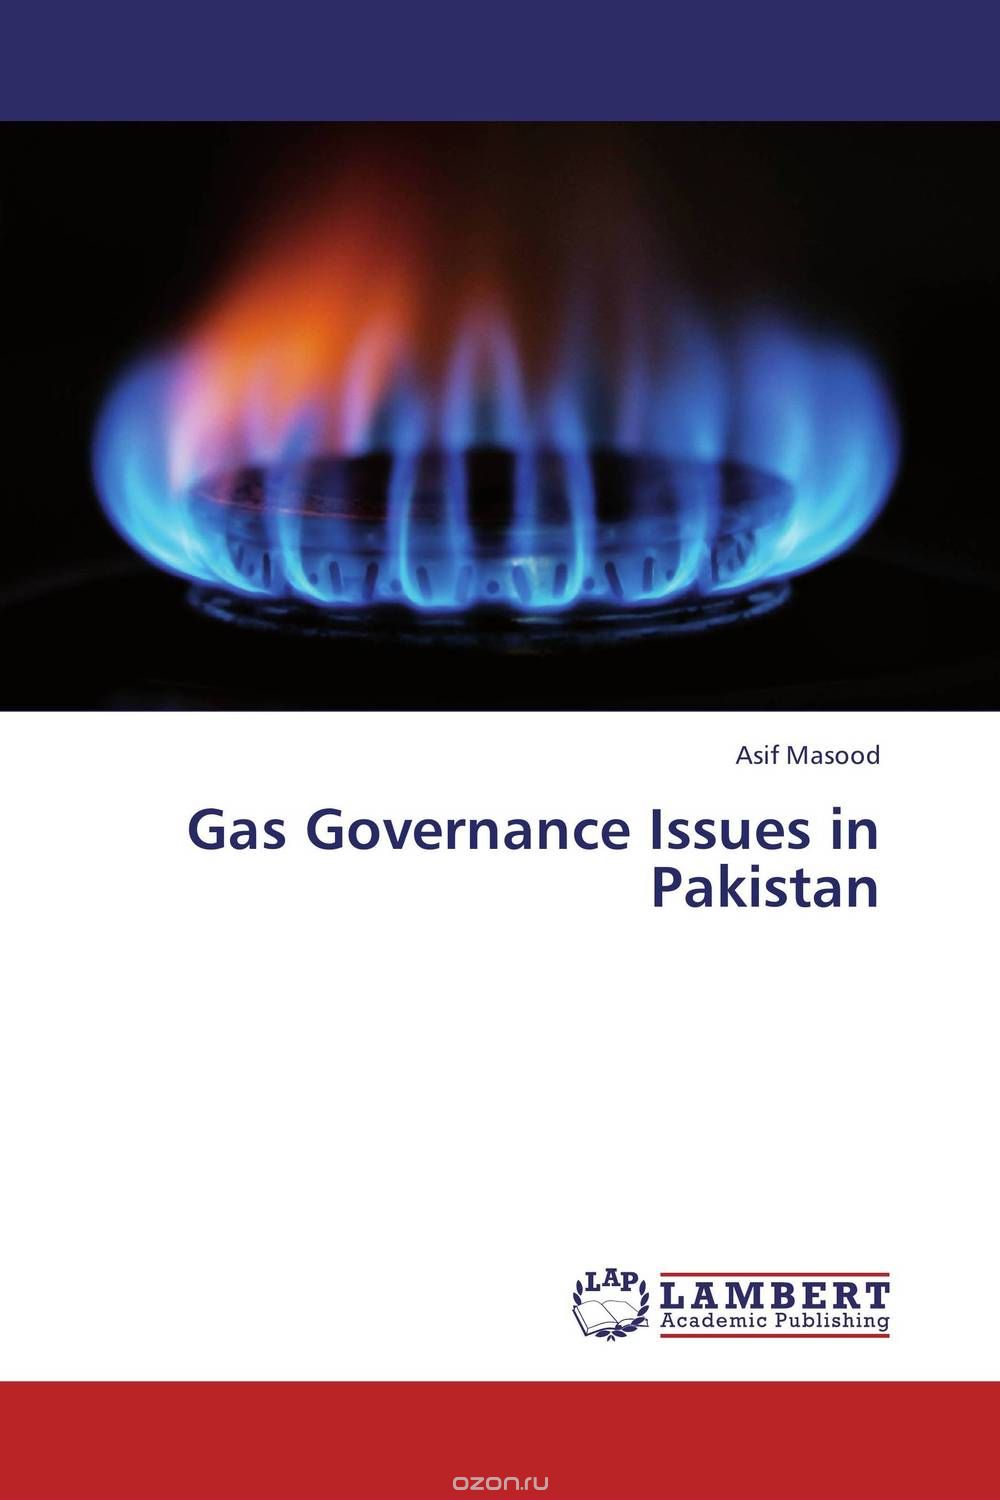 Скачать книгу "Gas Governance Issues in Pakistan"